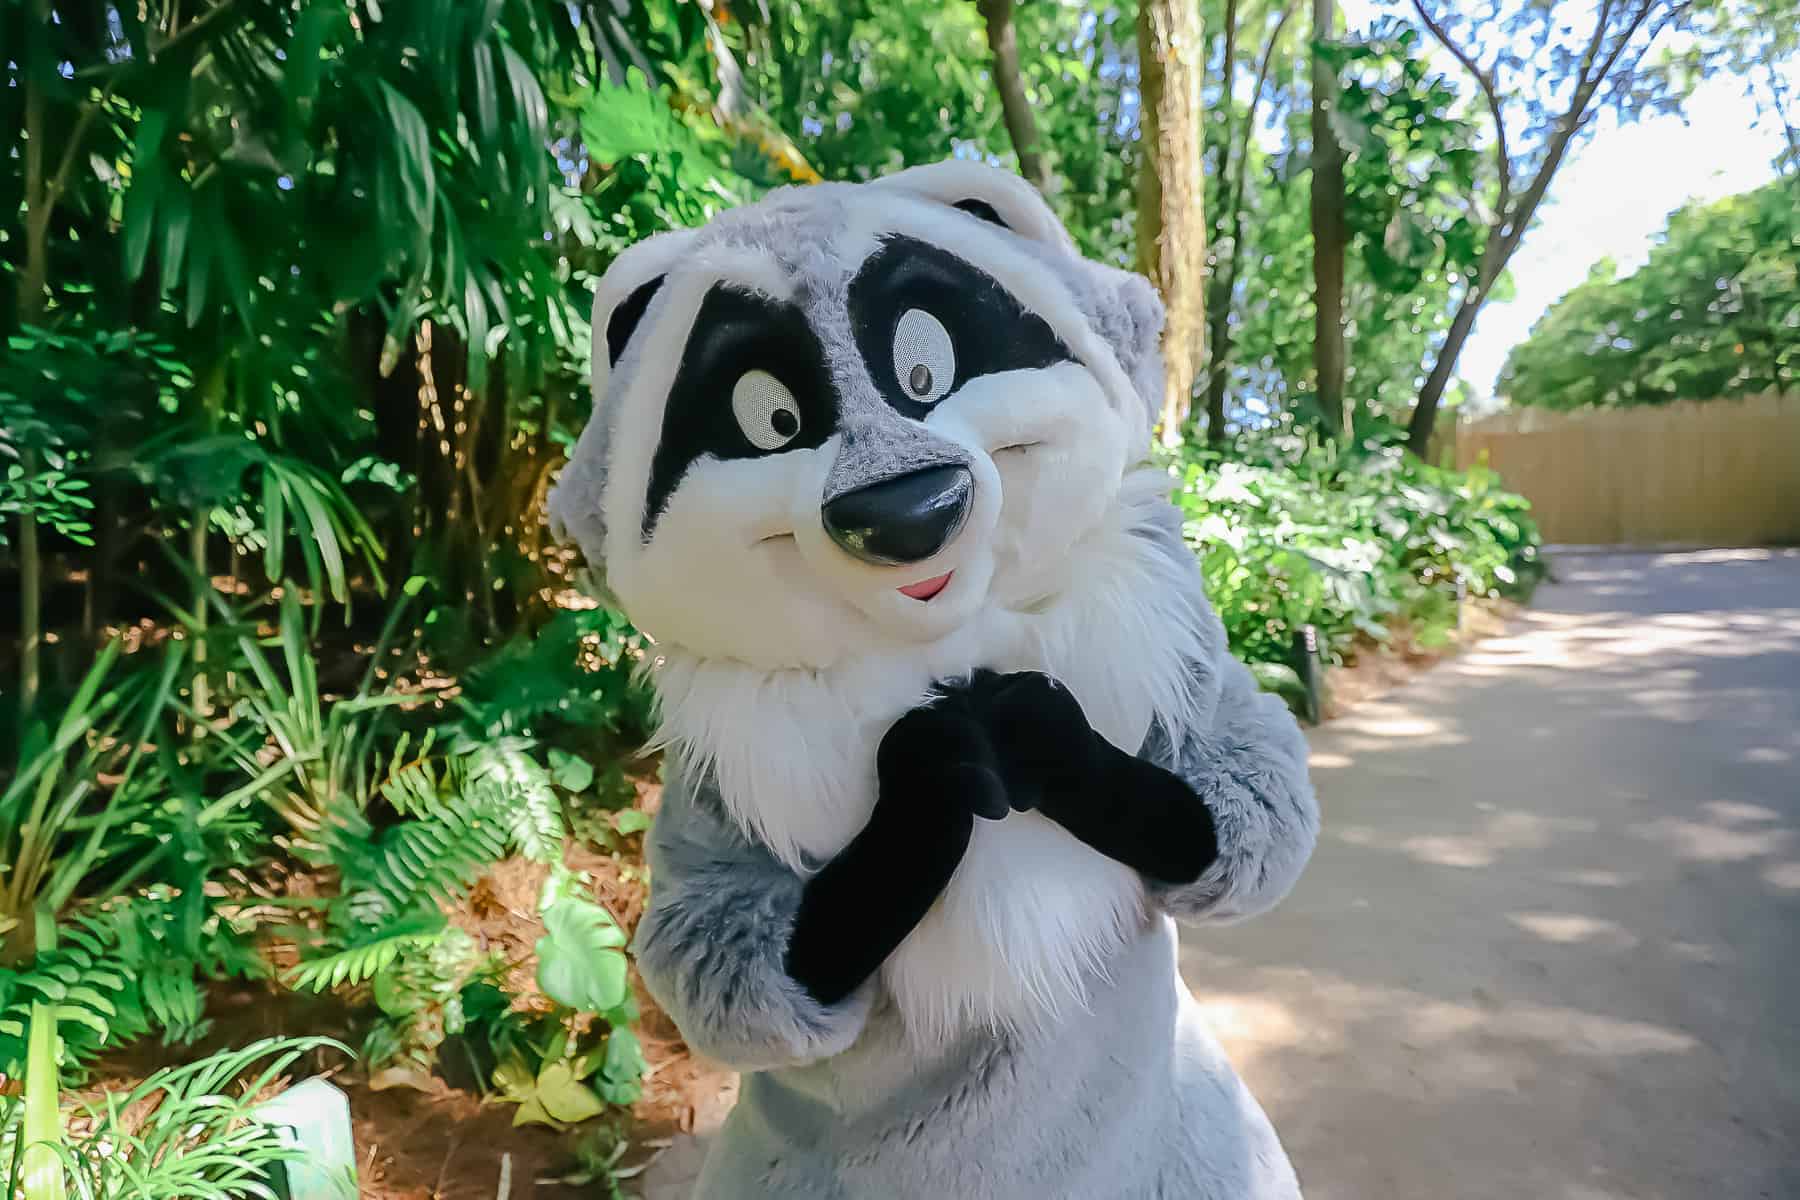 Meeko character sighting in Disney's Animal Kingdom's Oasis area 